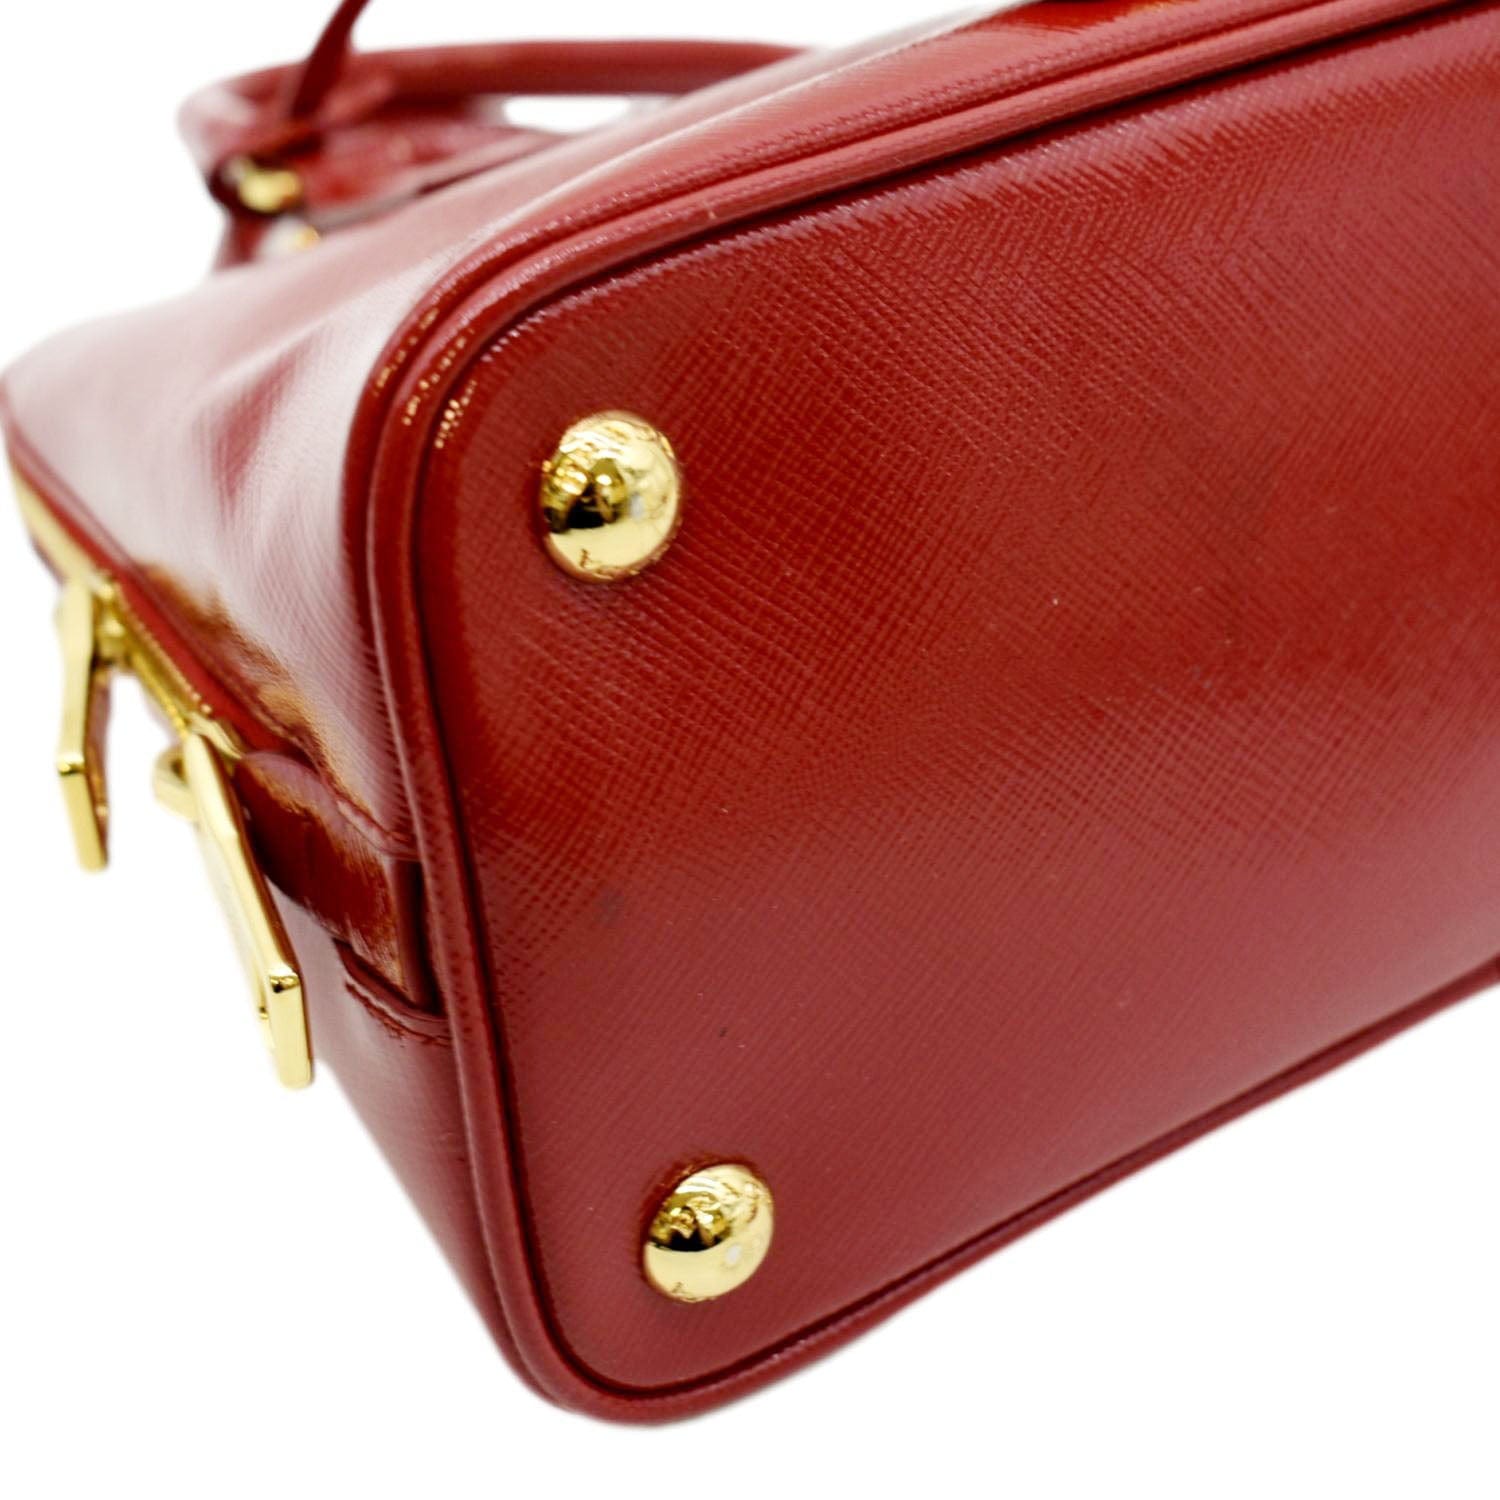 Prada Open Promenade Bag Vernice Saffiano Leather Medium Red